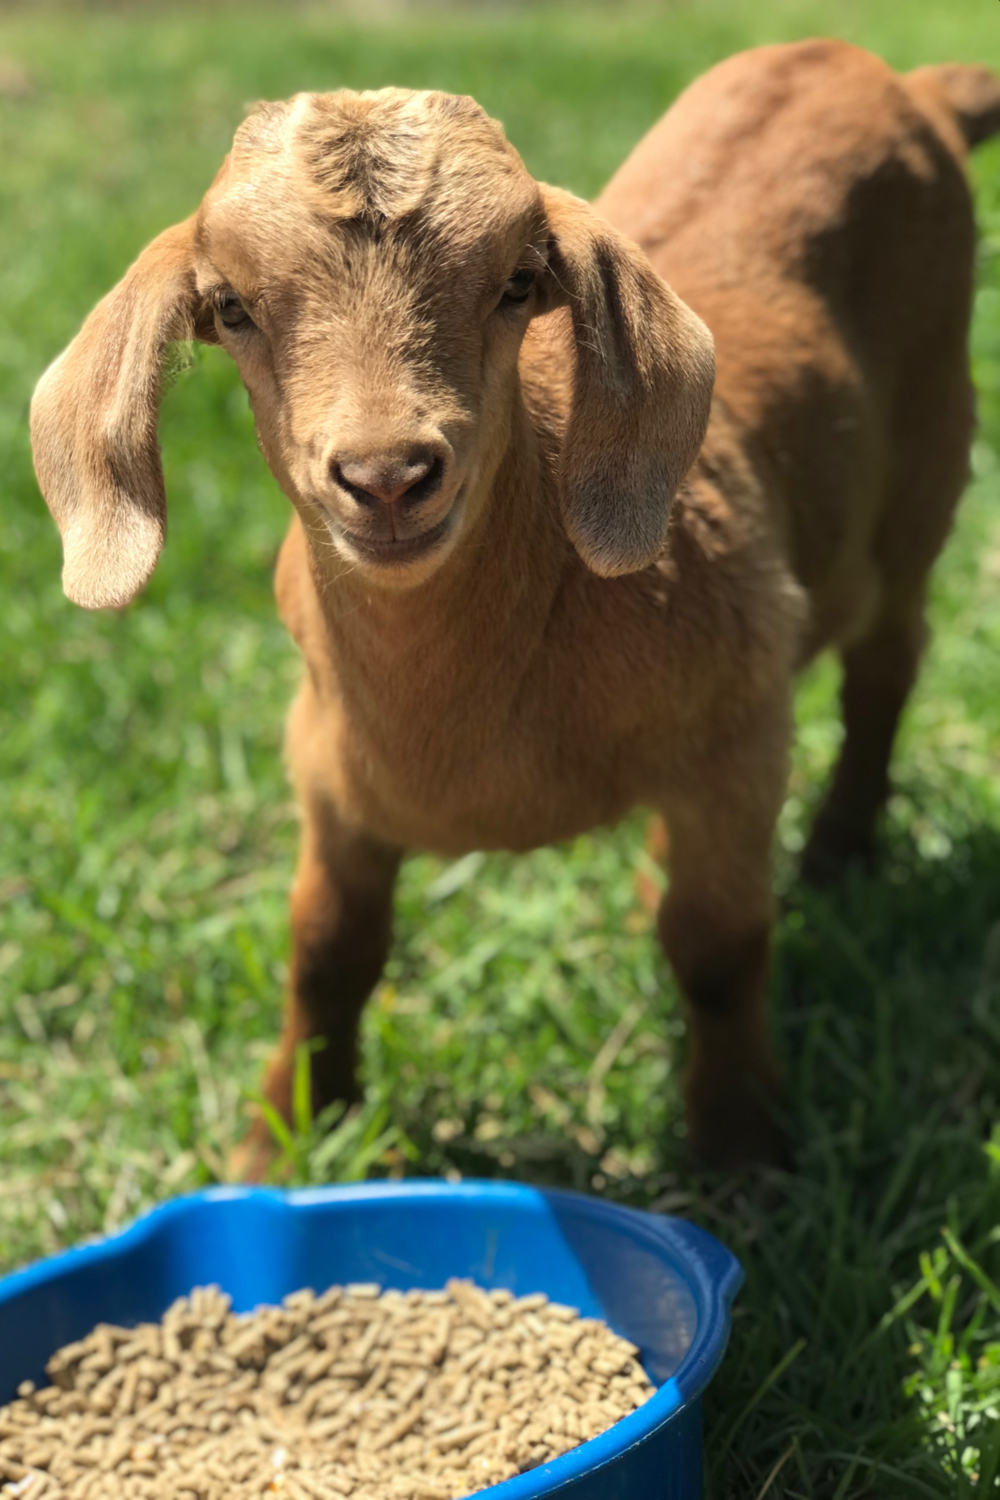 Goats Habits and Biology